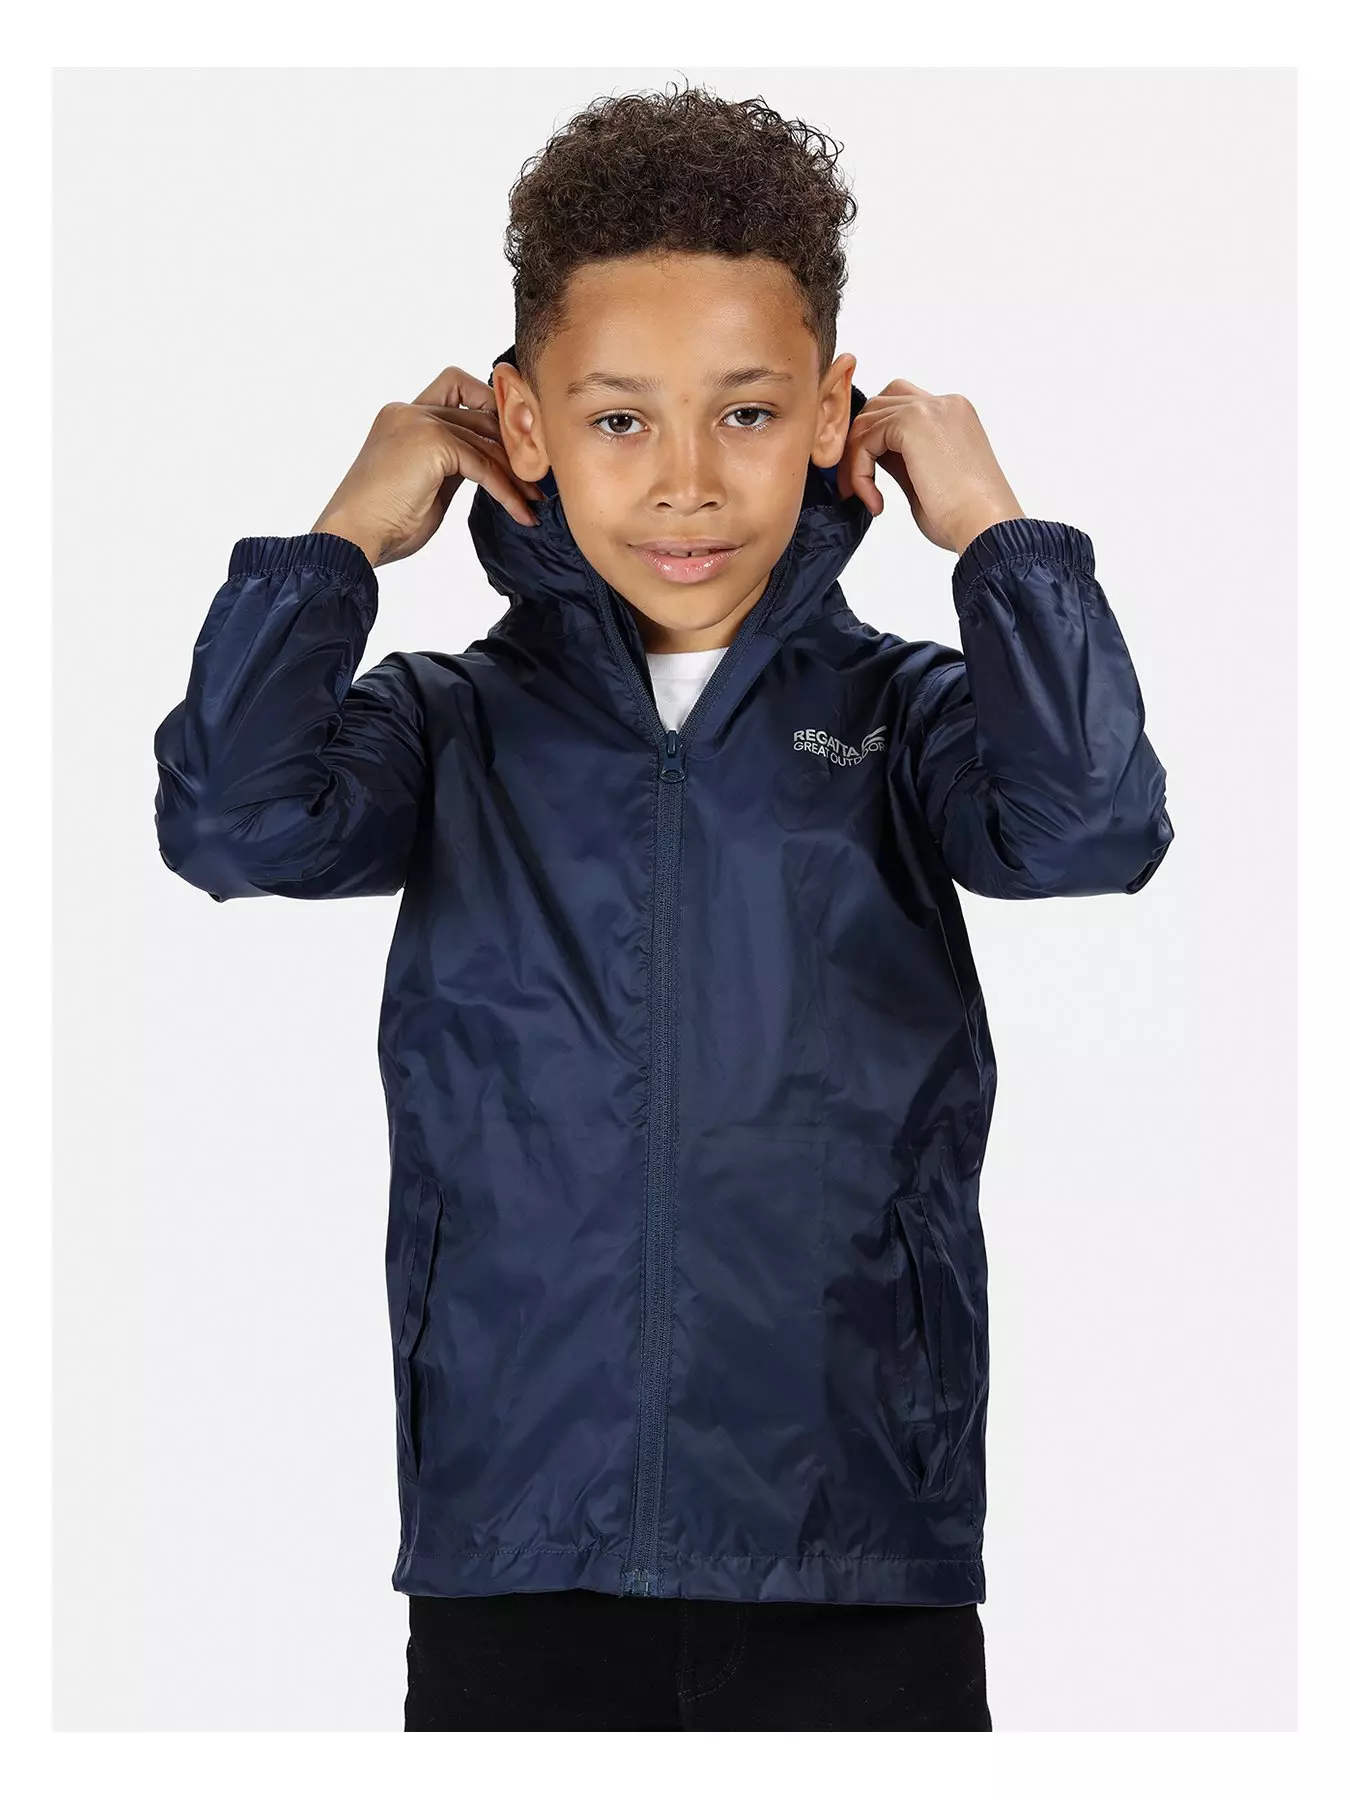 Hazy Blue Rain Drop Waterproof All In One kids suit (12-18 Months, Navy) :  : Fashion